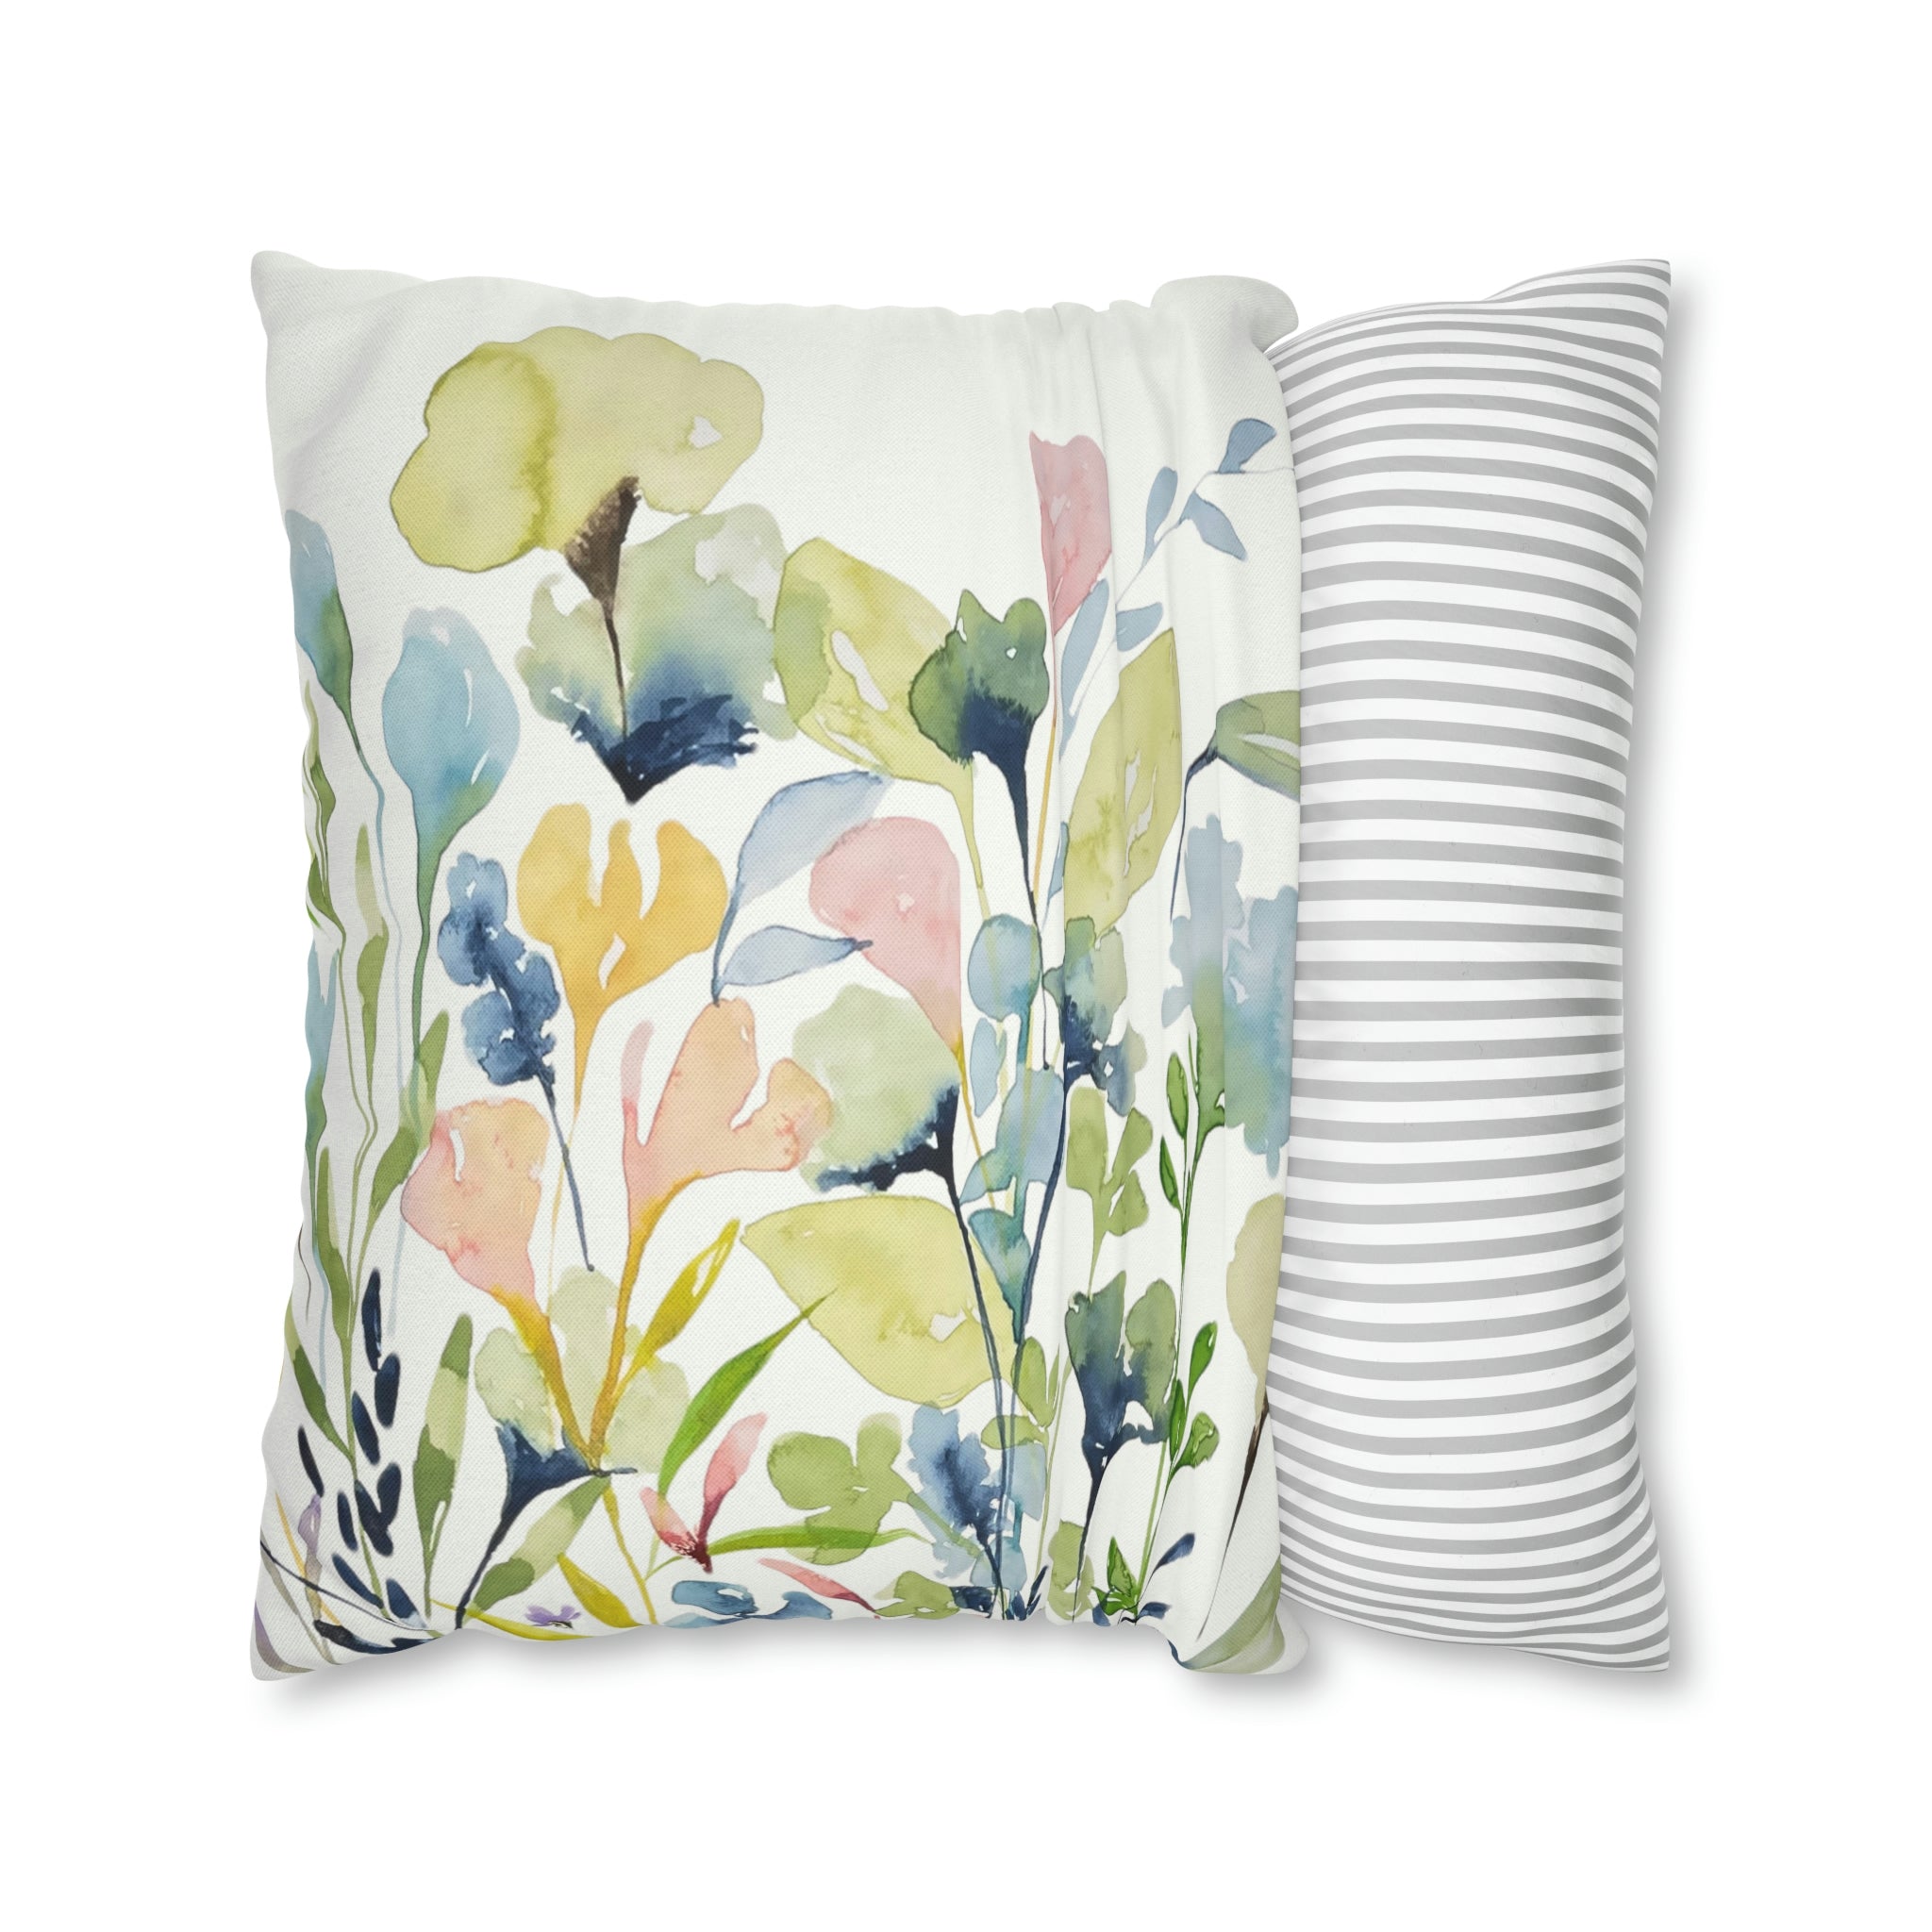 Prairie Wildflowers #2 Botanical Garden Print on Throw Pillow Cover